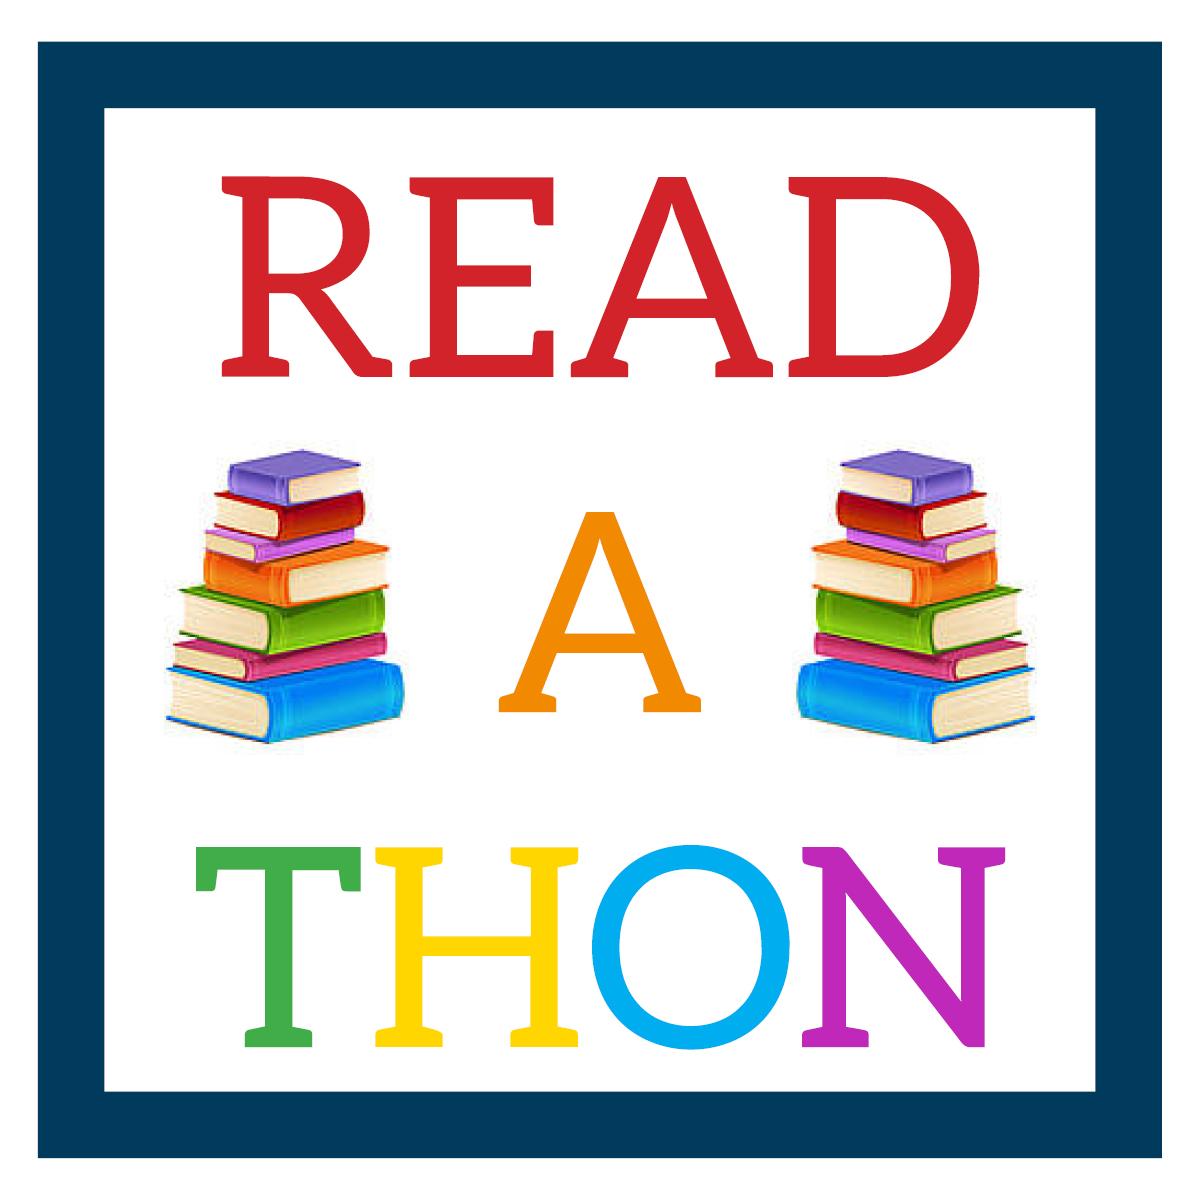 Readathon logo, stacks of colorful books